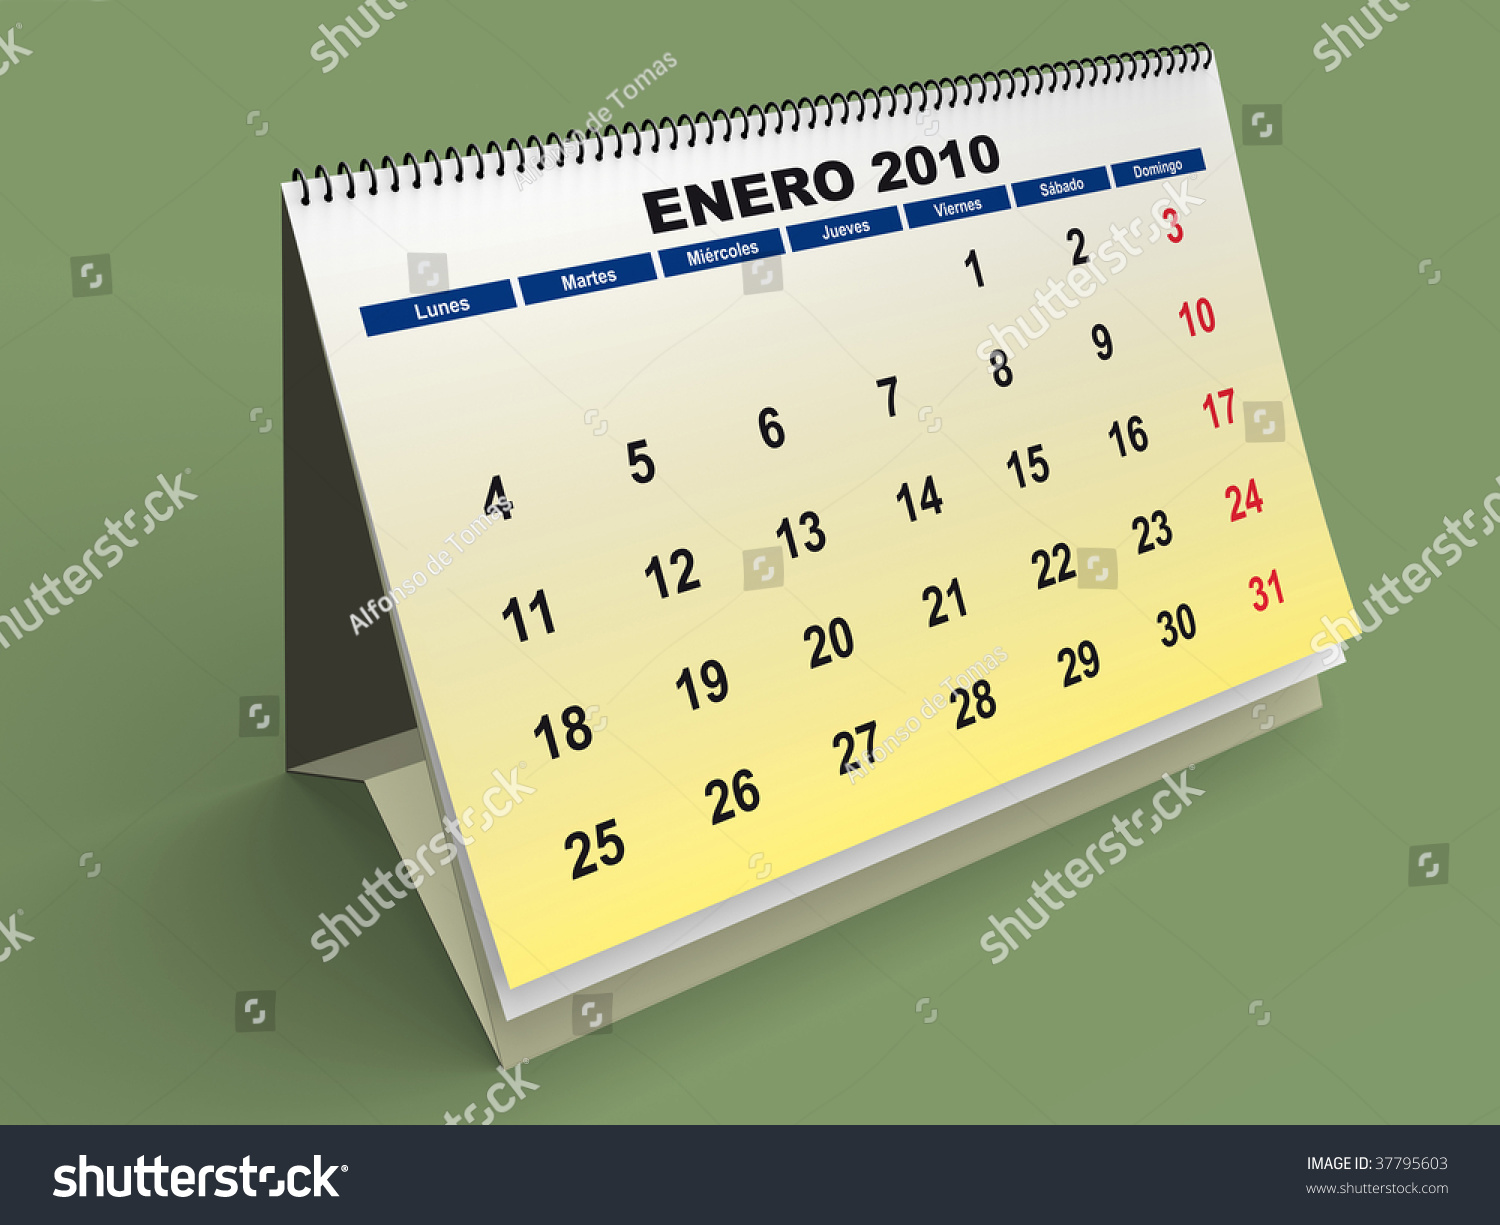 Enero. Monthly Calendar In Spanish Stock Photo 37795603 Shutterstock